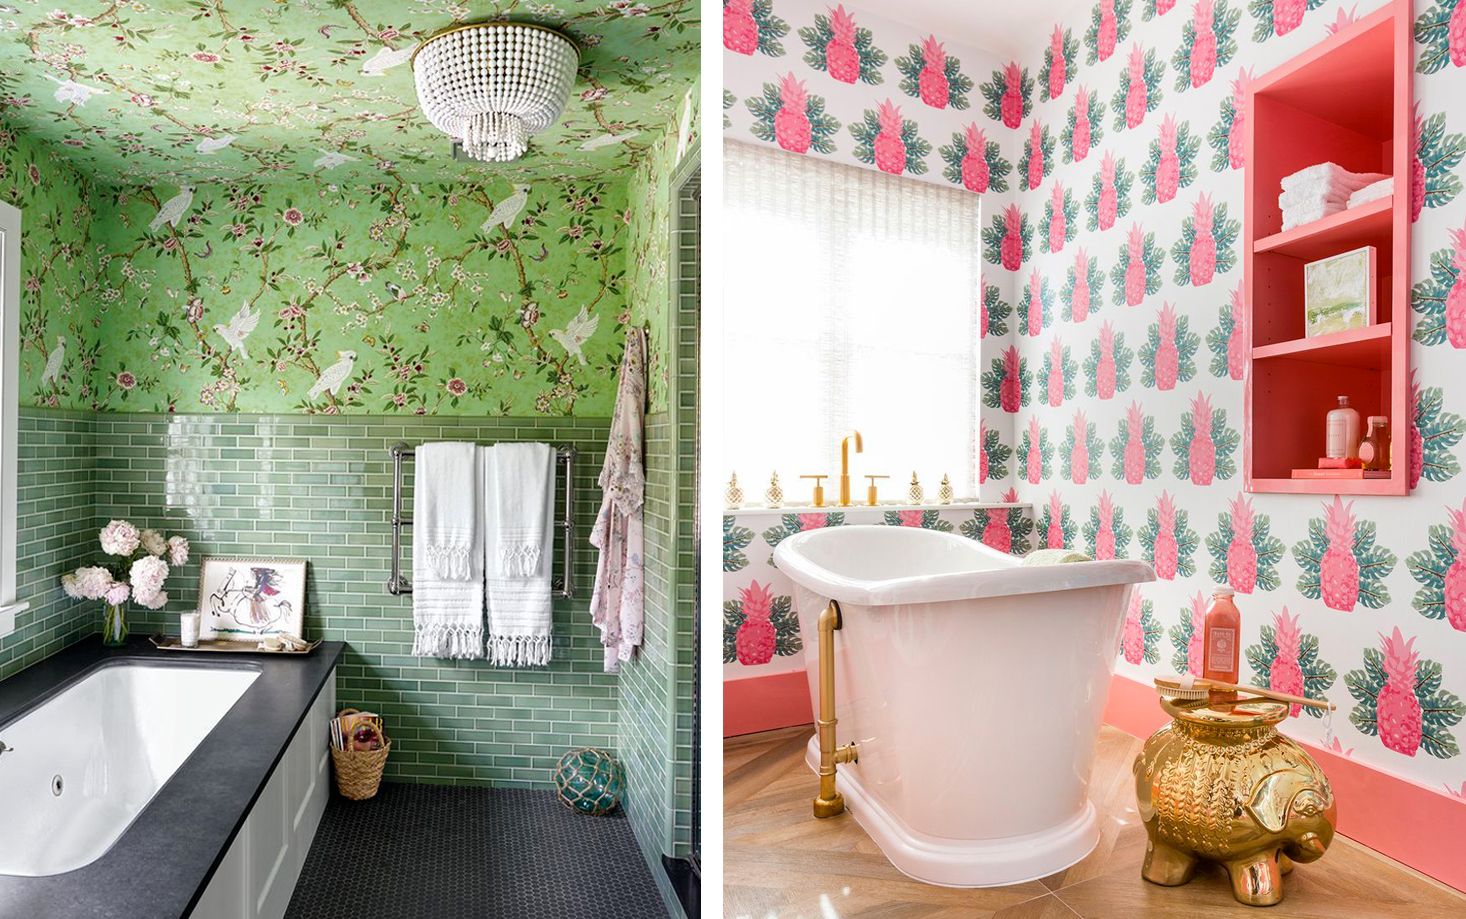 Best Bathroom Wallpaper Ideas - 22 Beautiful Bathroom Wall Coverings